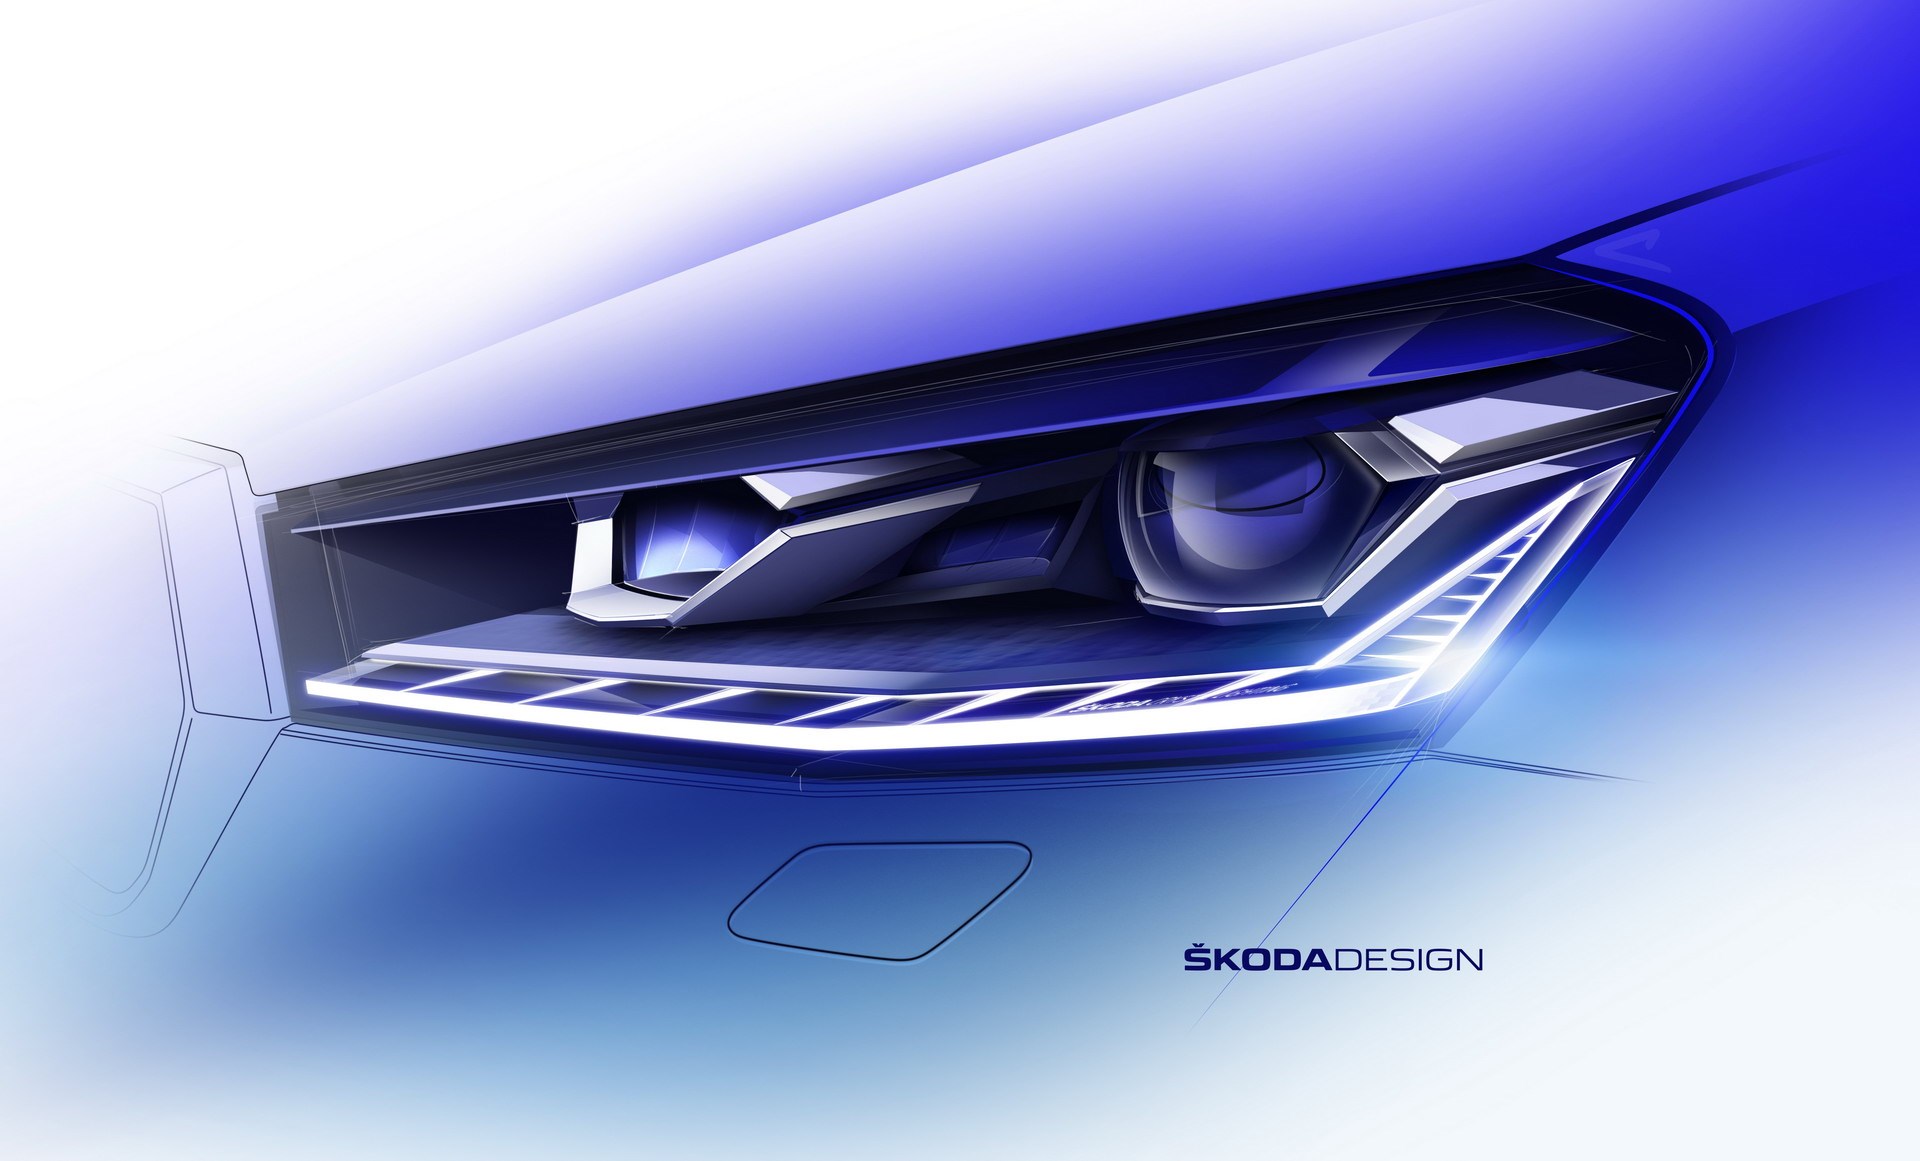 2021 Skoda Fabia'nın konsol tasarımı ortaya çıktı